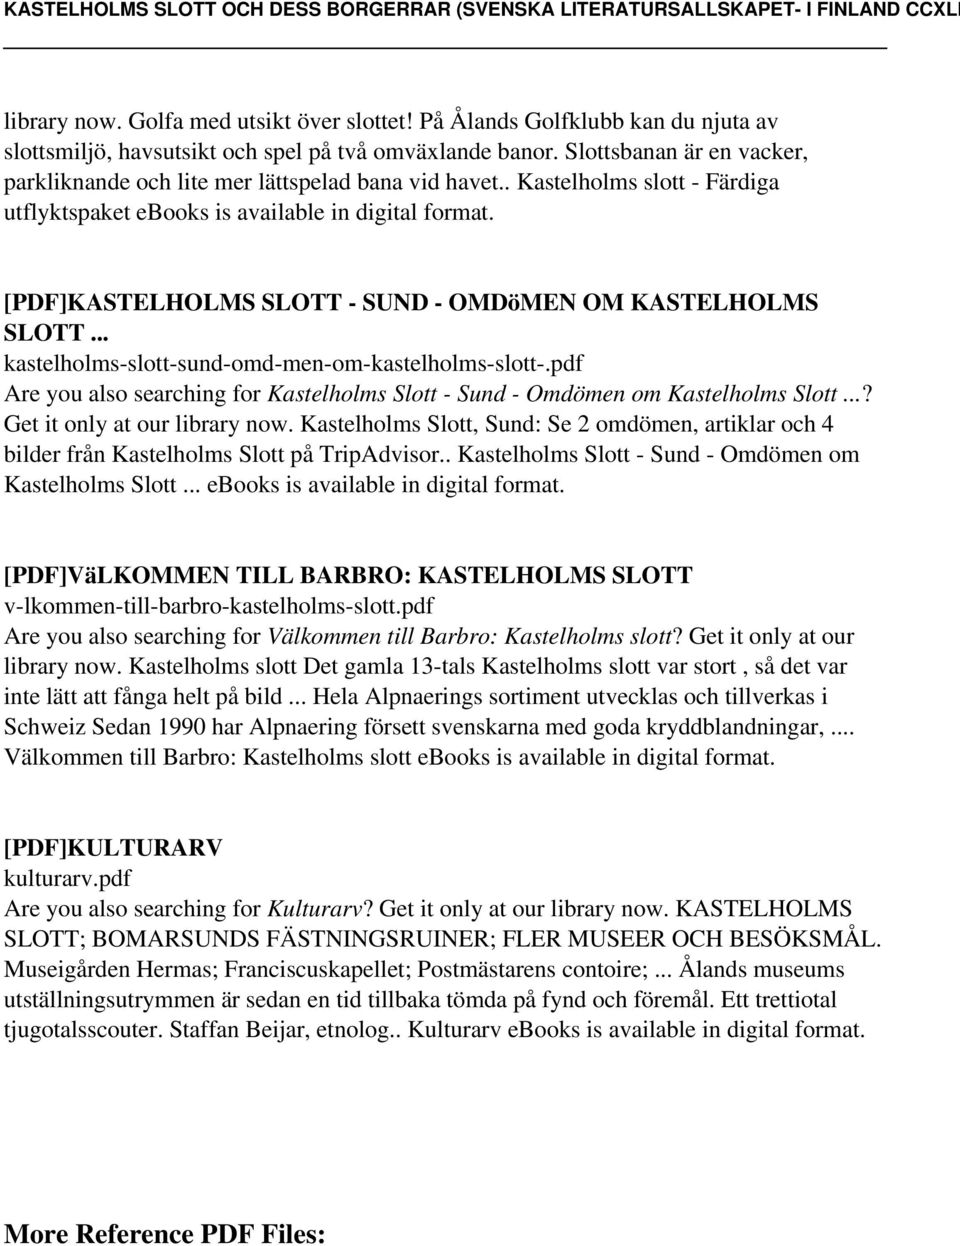 .. kastelholms-slott-sund-omd-men-om-kastelholms-slott-.pdf Are you also searching for Kastelholms Slott - Sund - Omdömen om Kastelholms Slott...? Get it only at our library now.